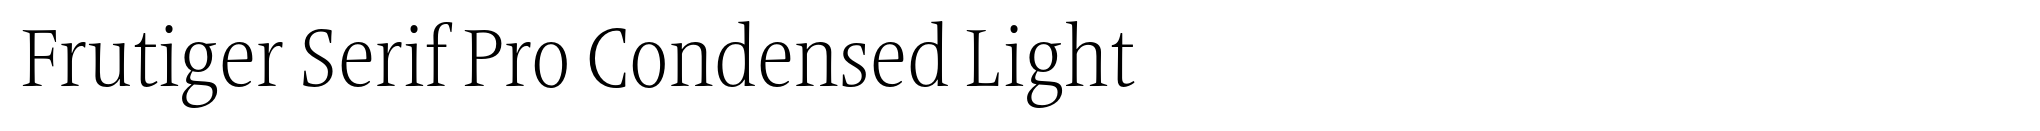 Frutiger Serif Pro Condensed Light image